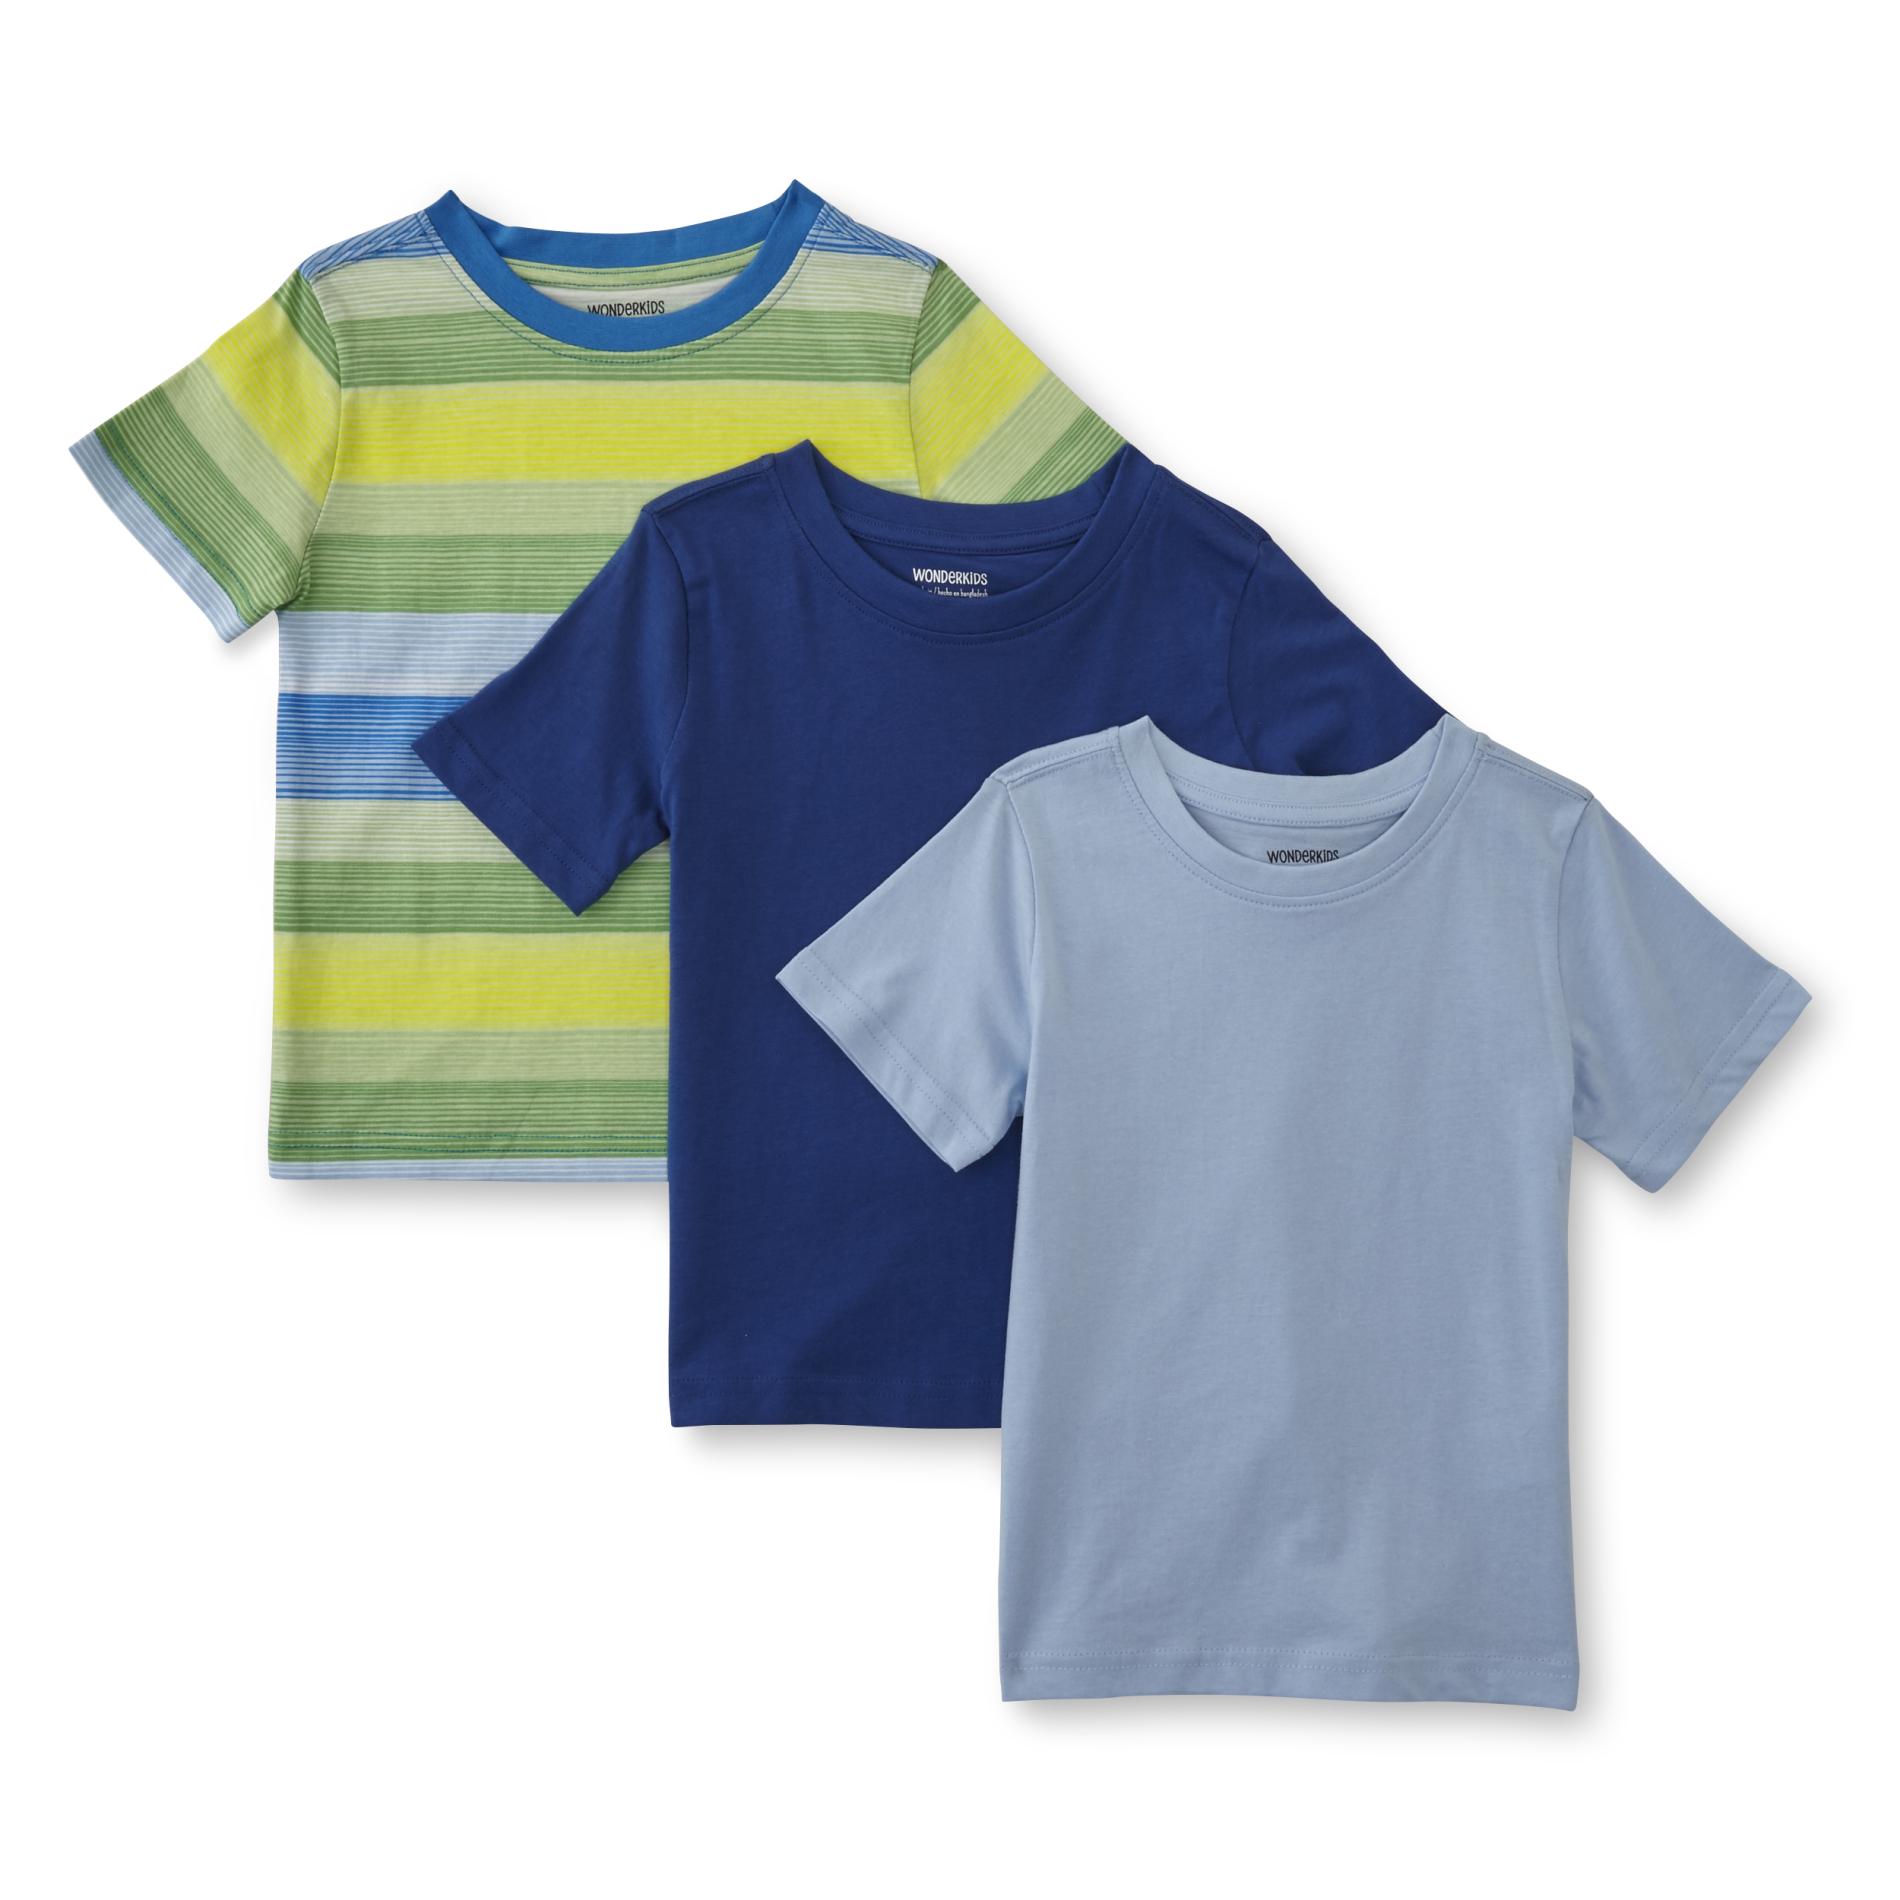 WonderKids Infant & Toddler Boys' 3-Pack Crew Neck T-Shirts - Striped